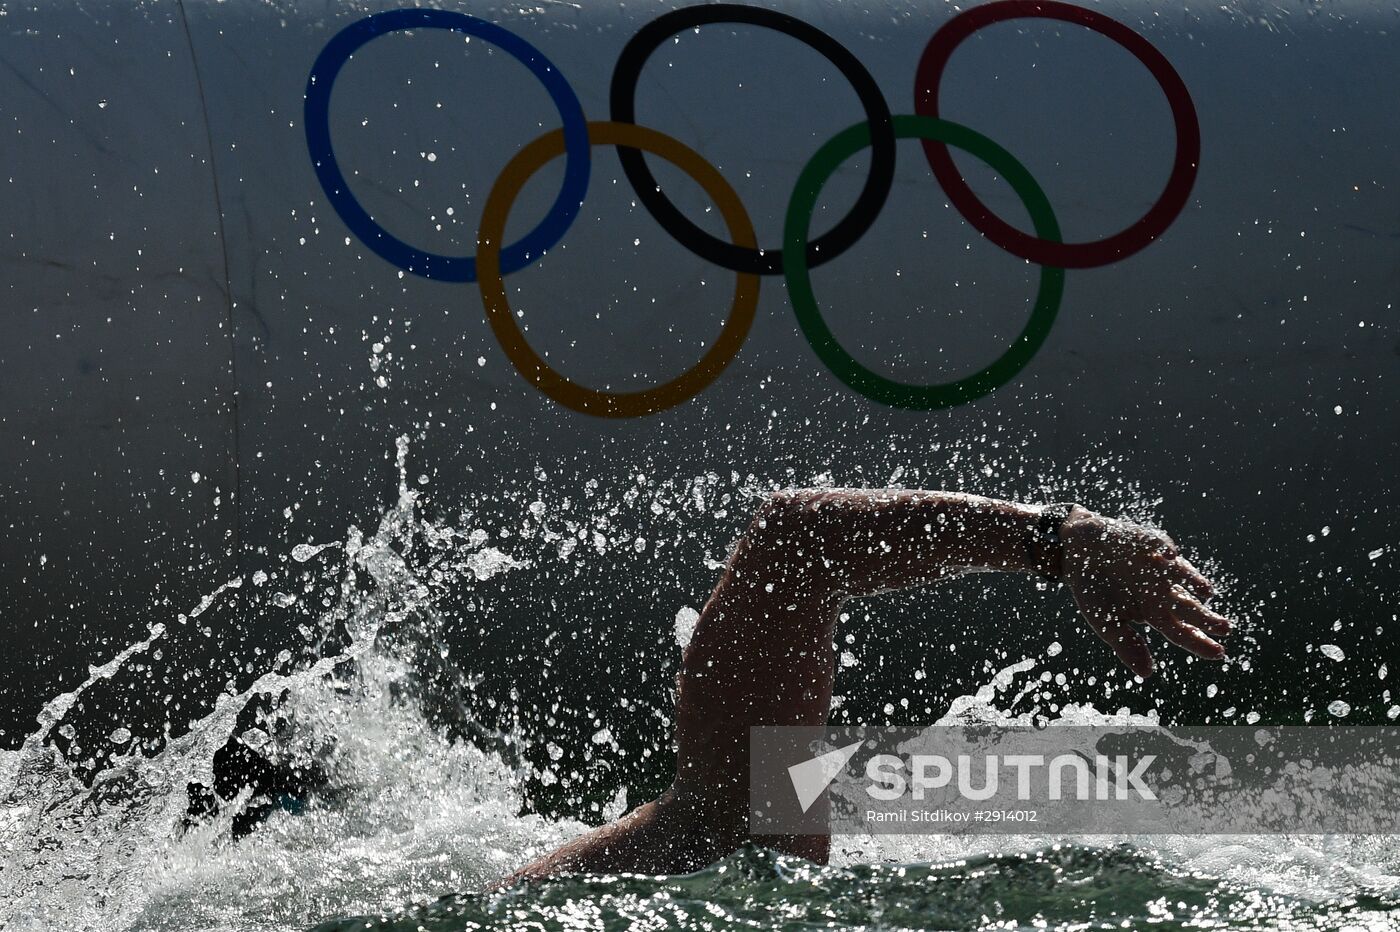 Summer Olympics 2016. Men's Swimming open water swimming